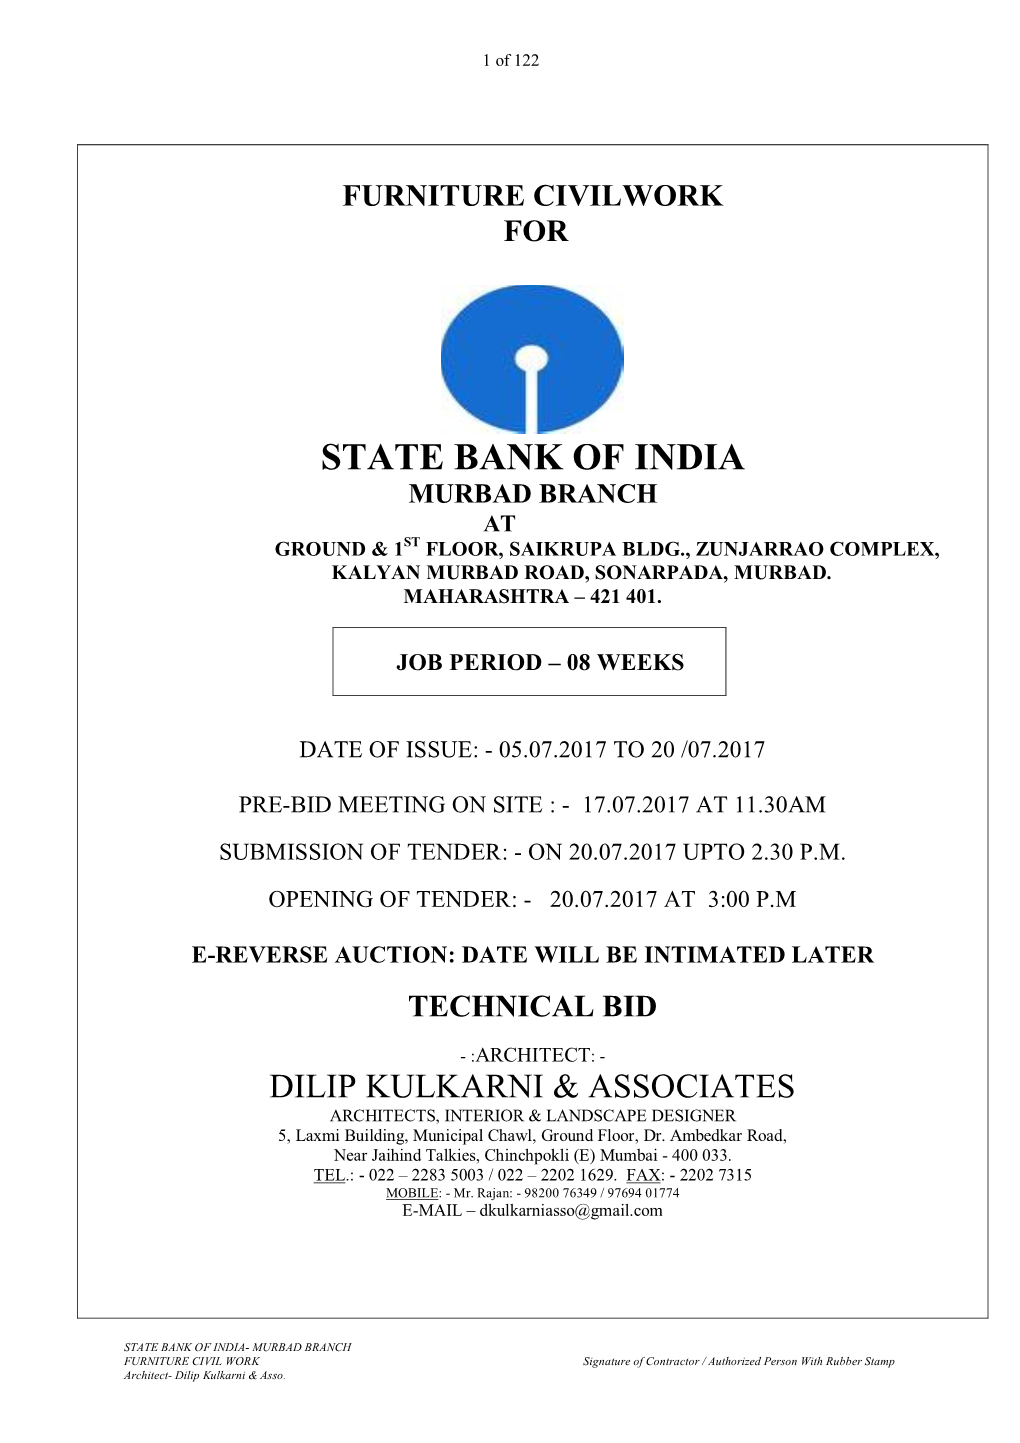 State Bank of India Murbad Branch at Ground & 1St Floor, Saikrupa Bldg., Zunjarrao Complex, Kalyan Murbad Road, Sonarpada, Murbad